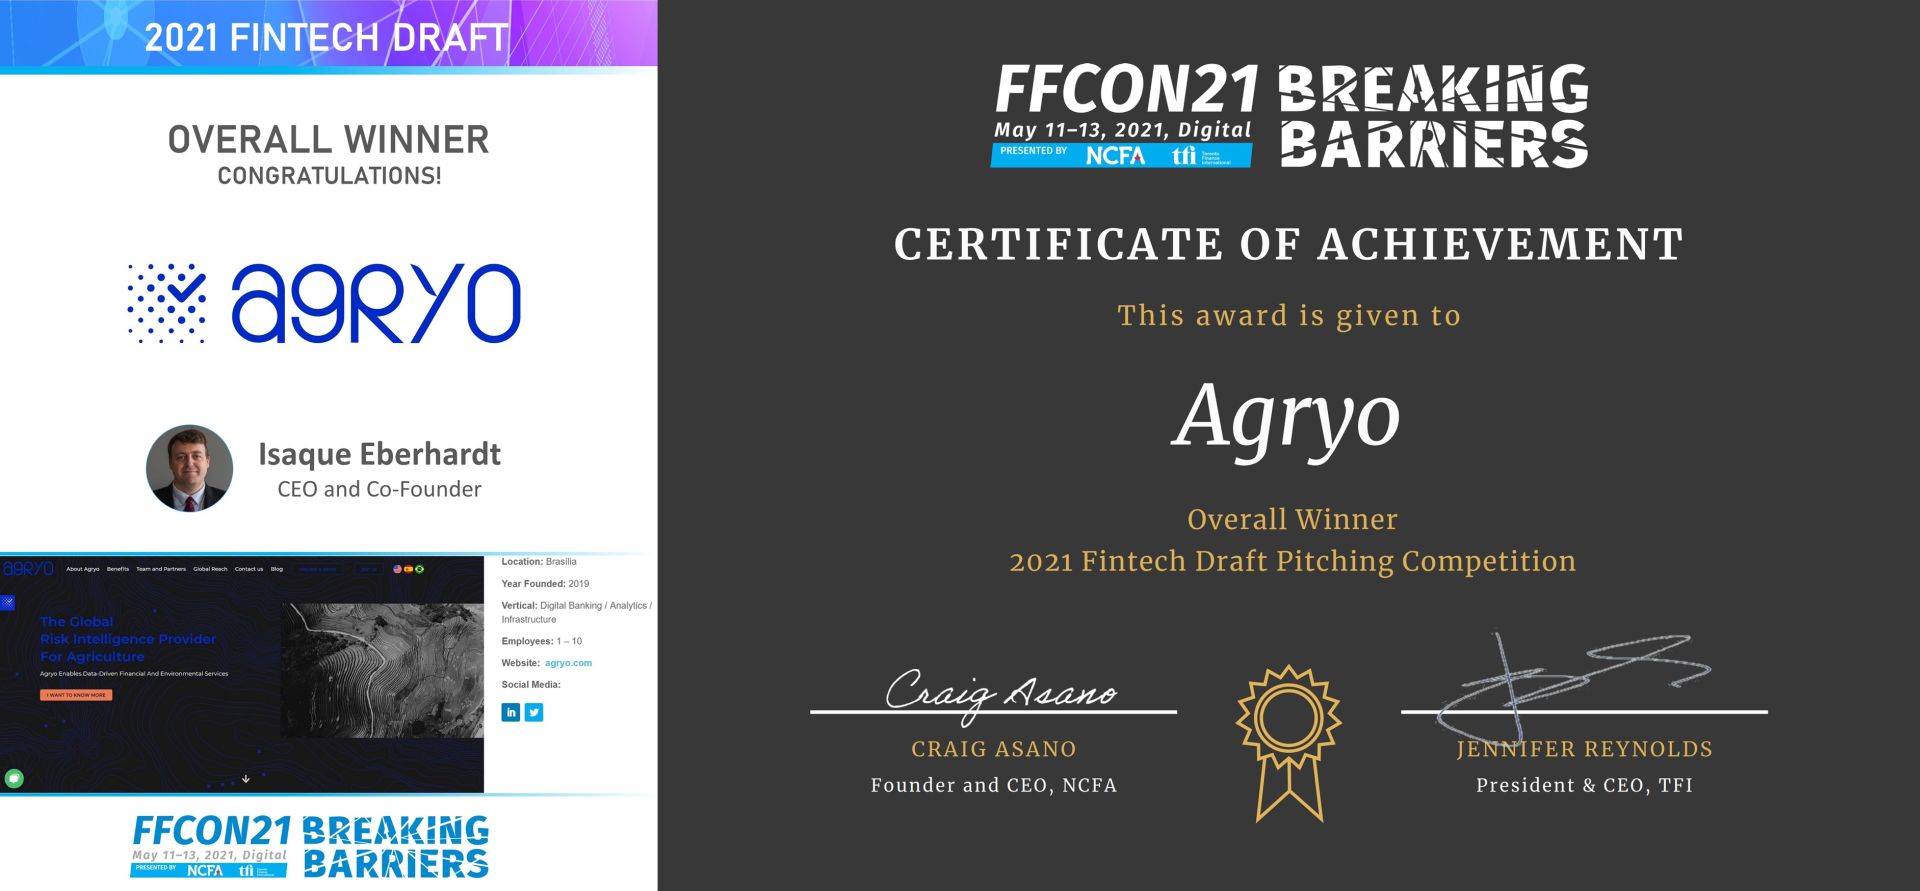 FFCON 2021 Fintech Draft Overall Winner - Agryo